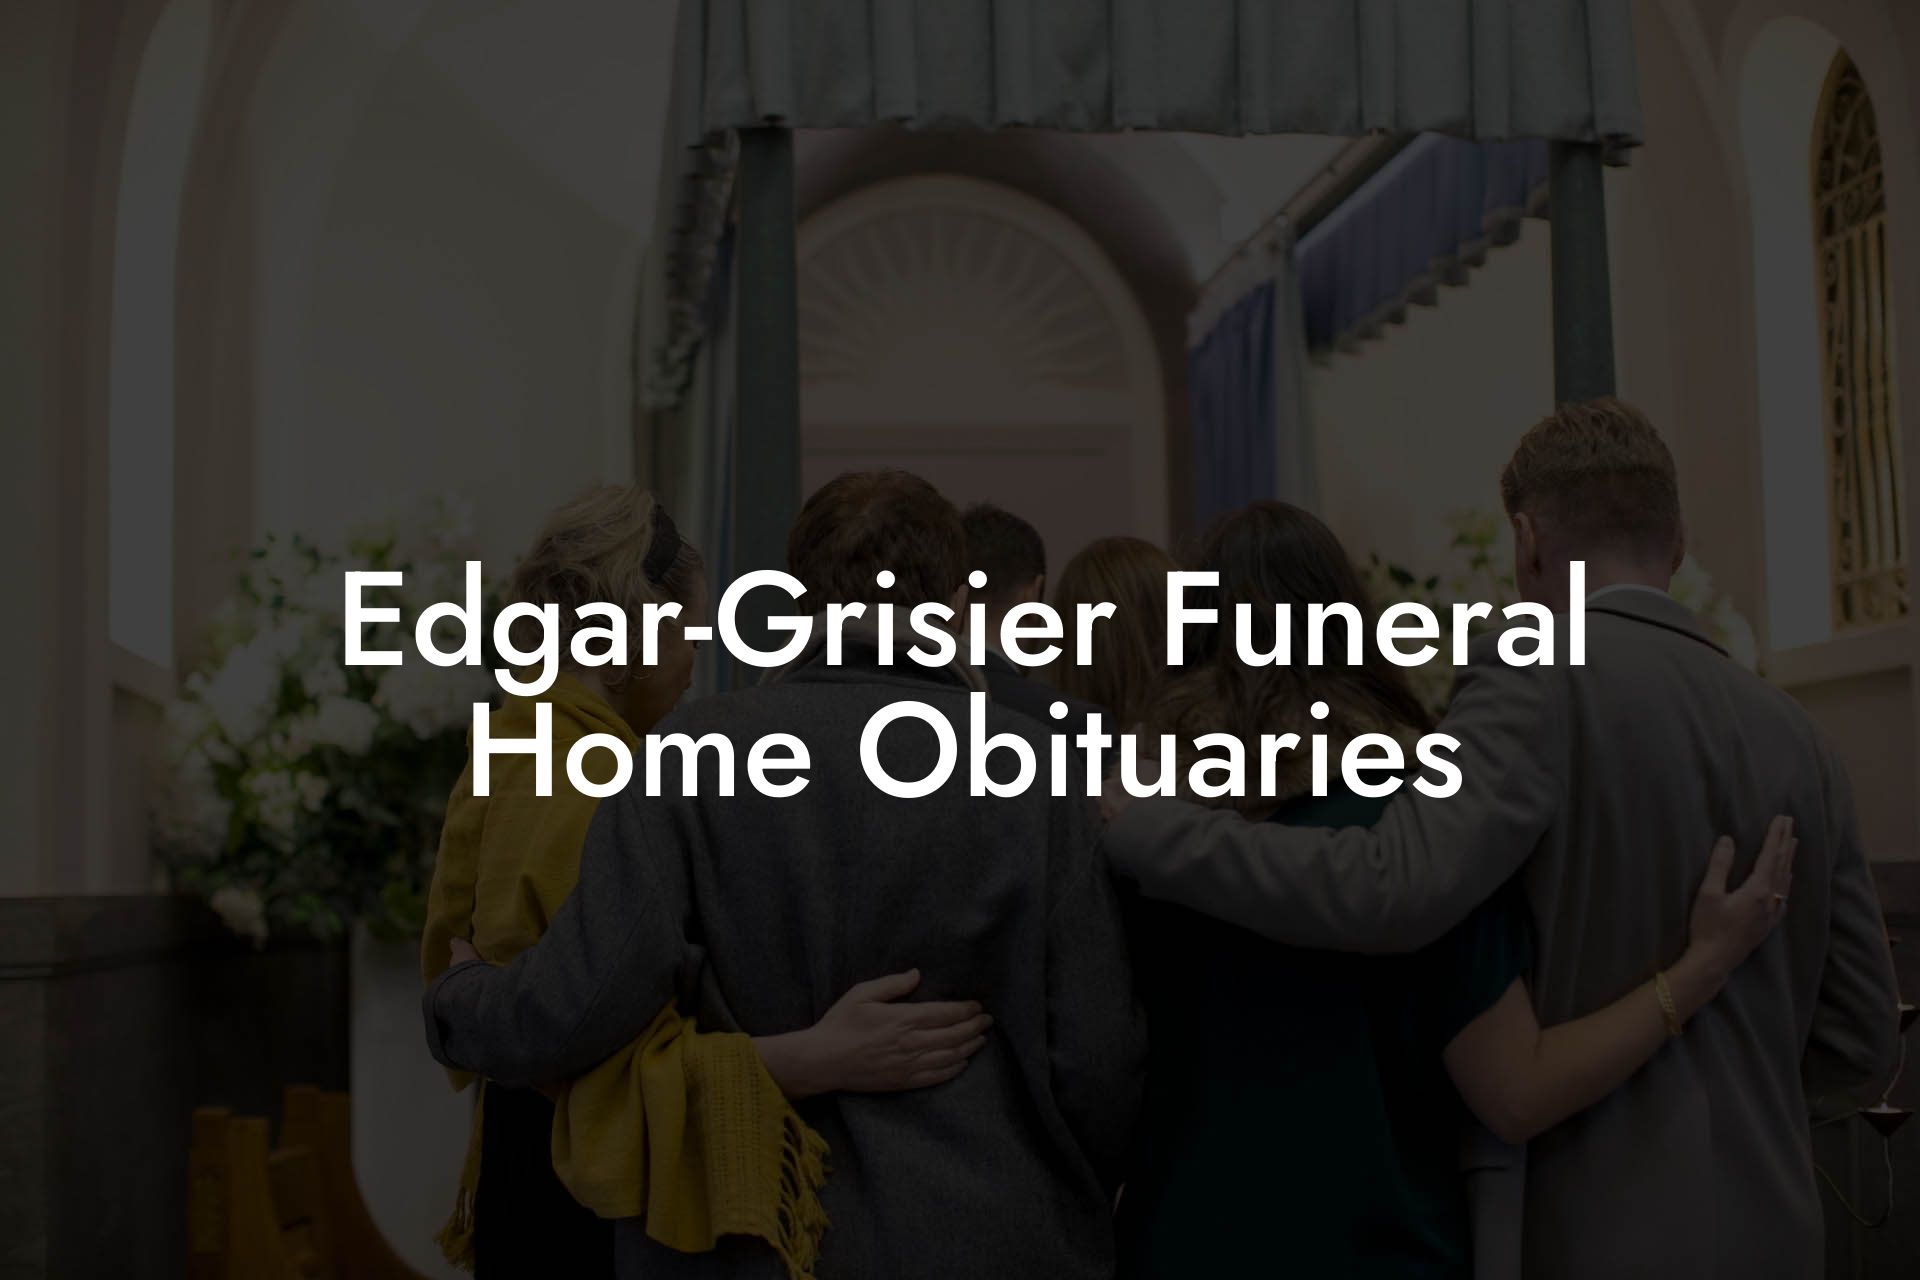 Edgar-Grisier Funeral Home Obituaries